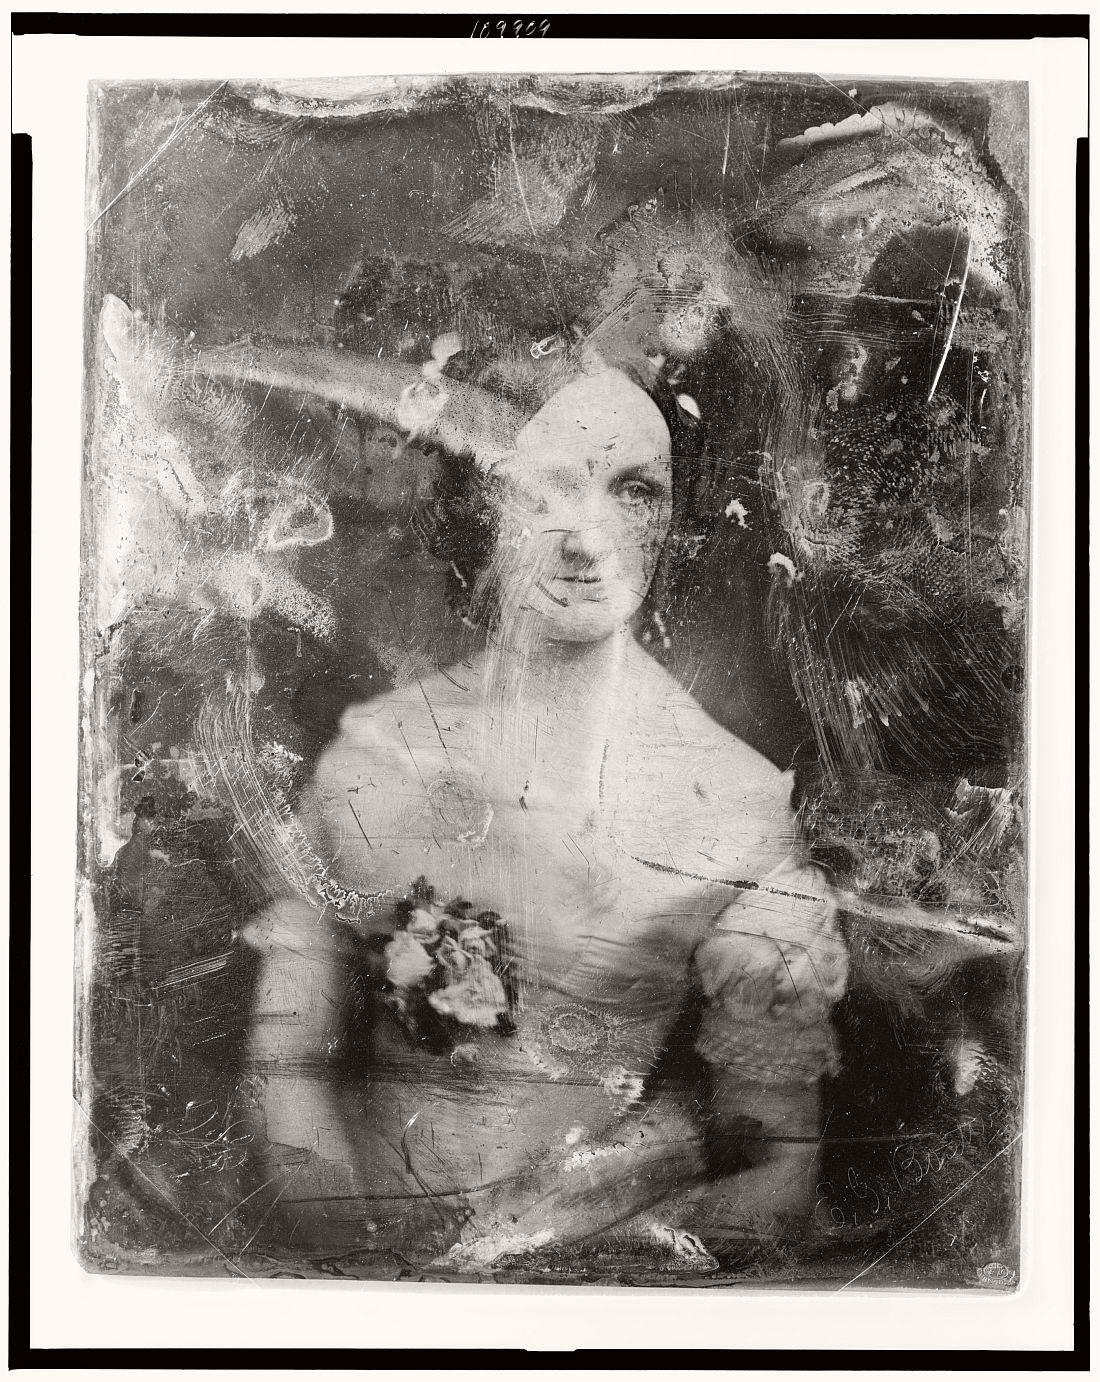 vintage-daguerreotype-portraits-from-xix-century-1844-1860-18